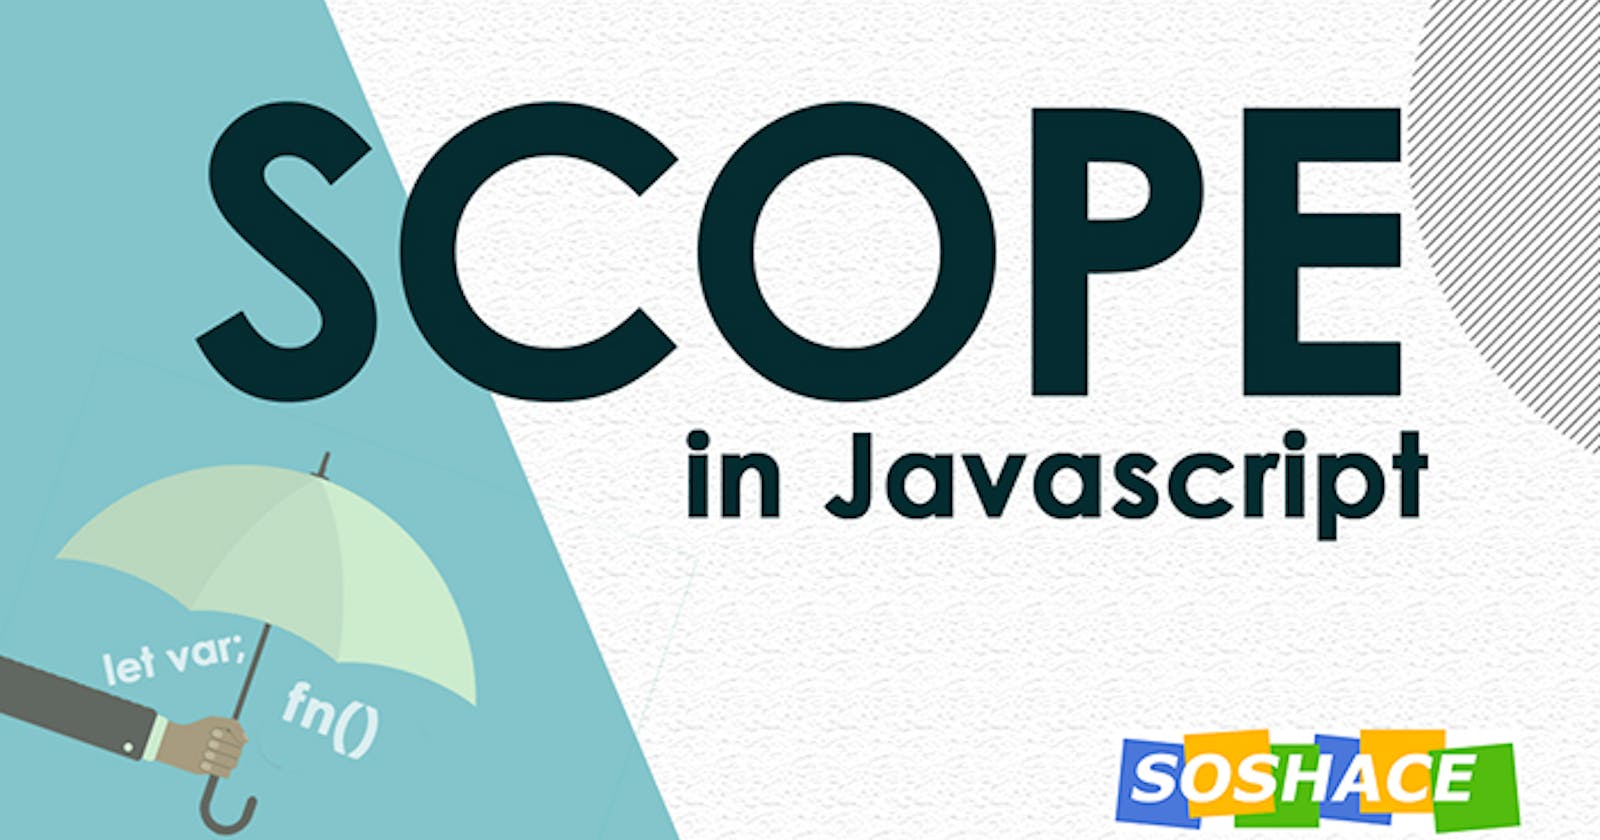 Scope in Javascript